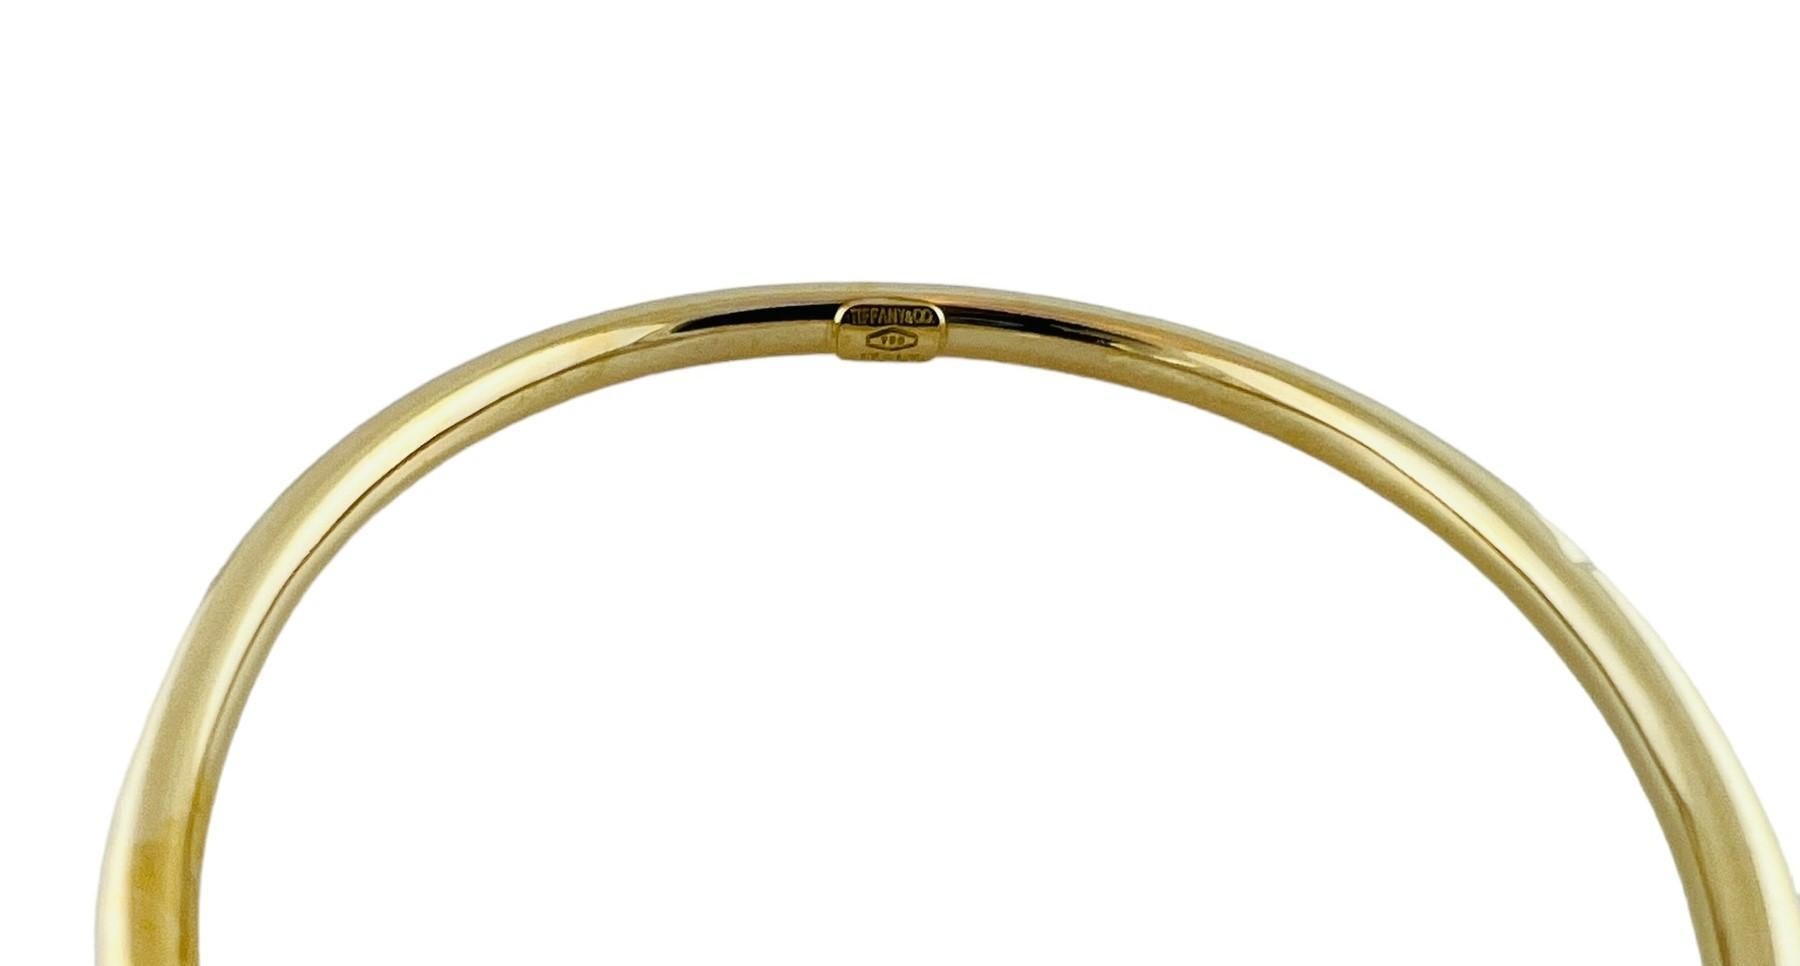 Tiffany & Co. 18K Yellow Gold Oval Bangle Bracelet #16680 4